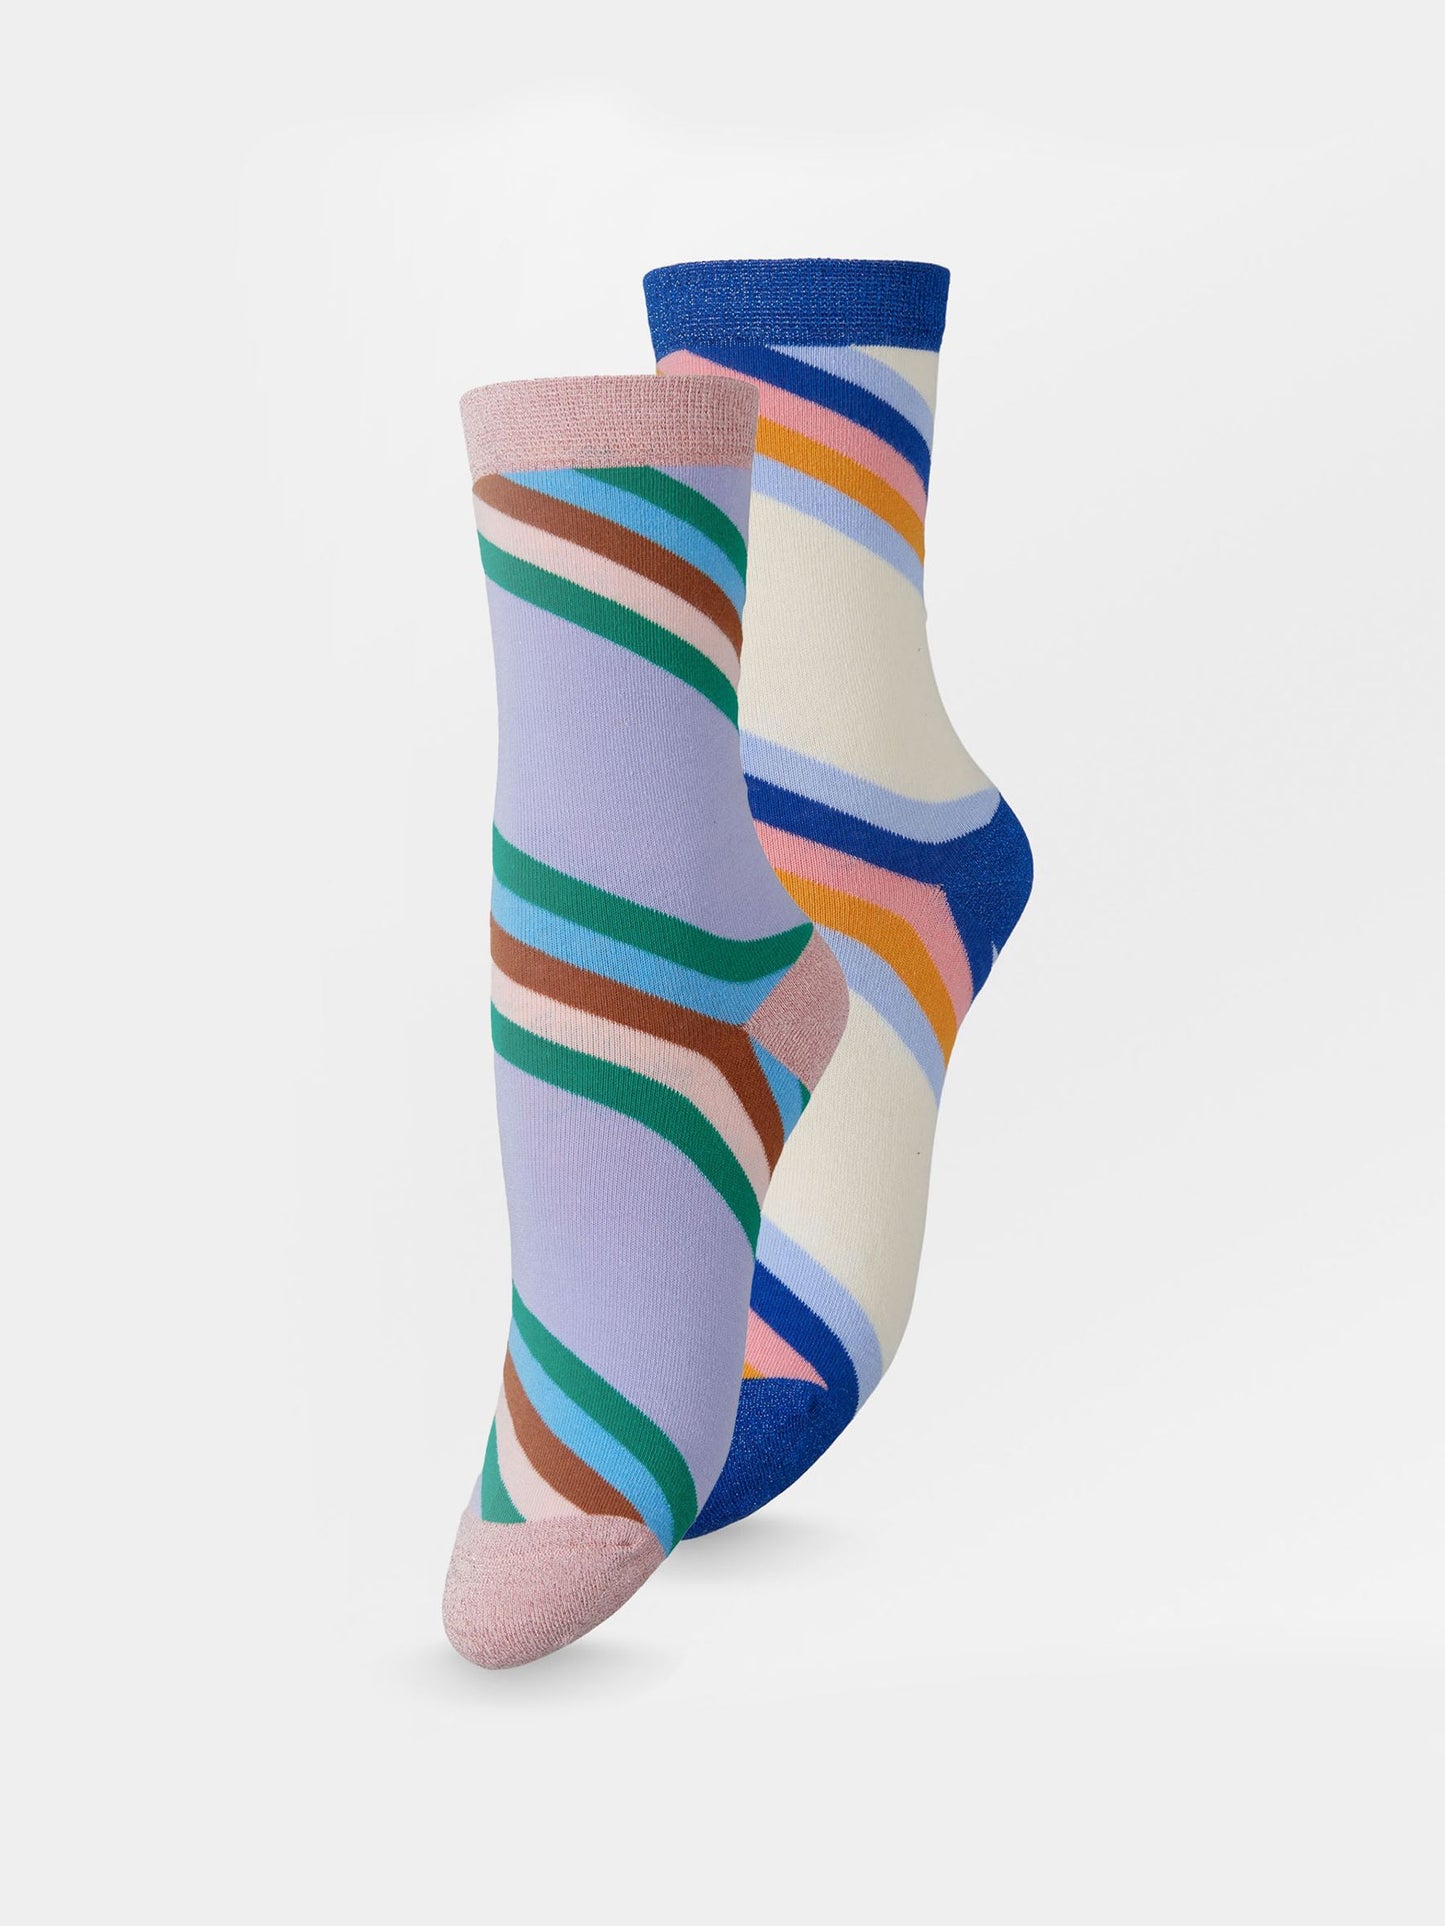 Becksöndergaard, Oblique Striped Sock 2 Pack - Blue/Lavender, archive, archive, sale, sale